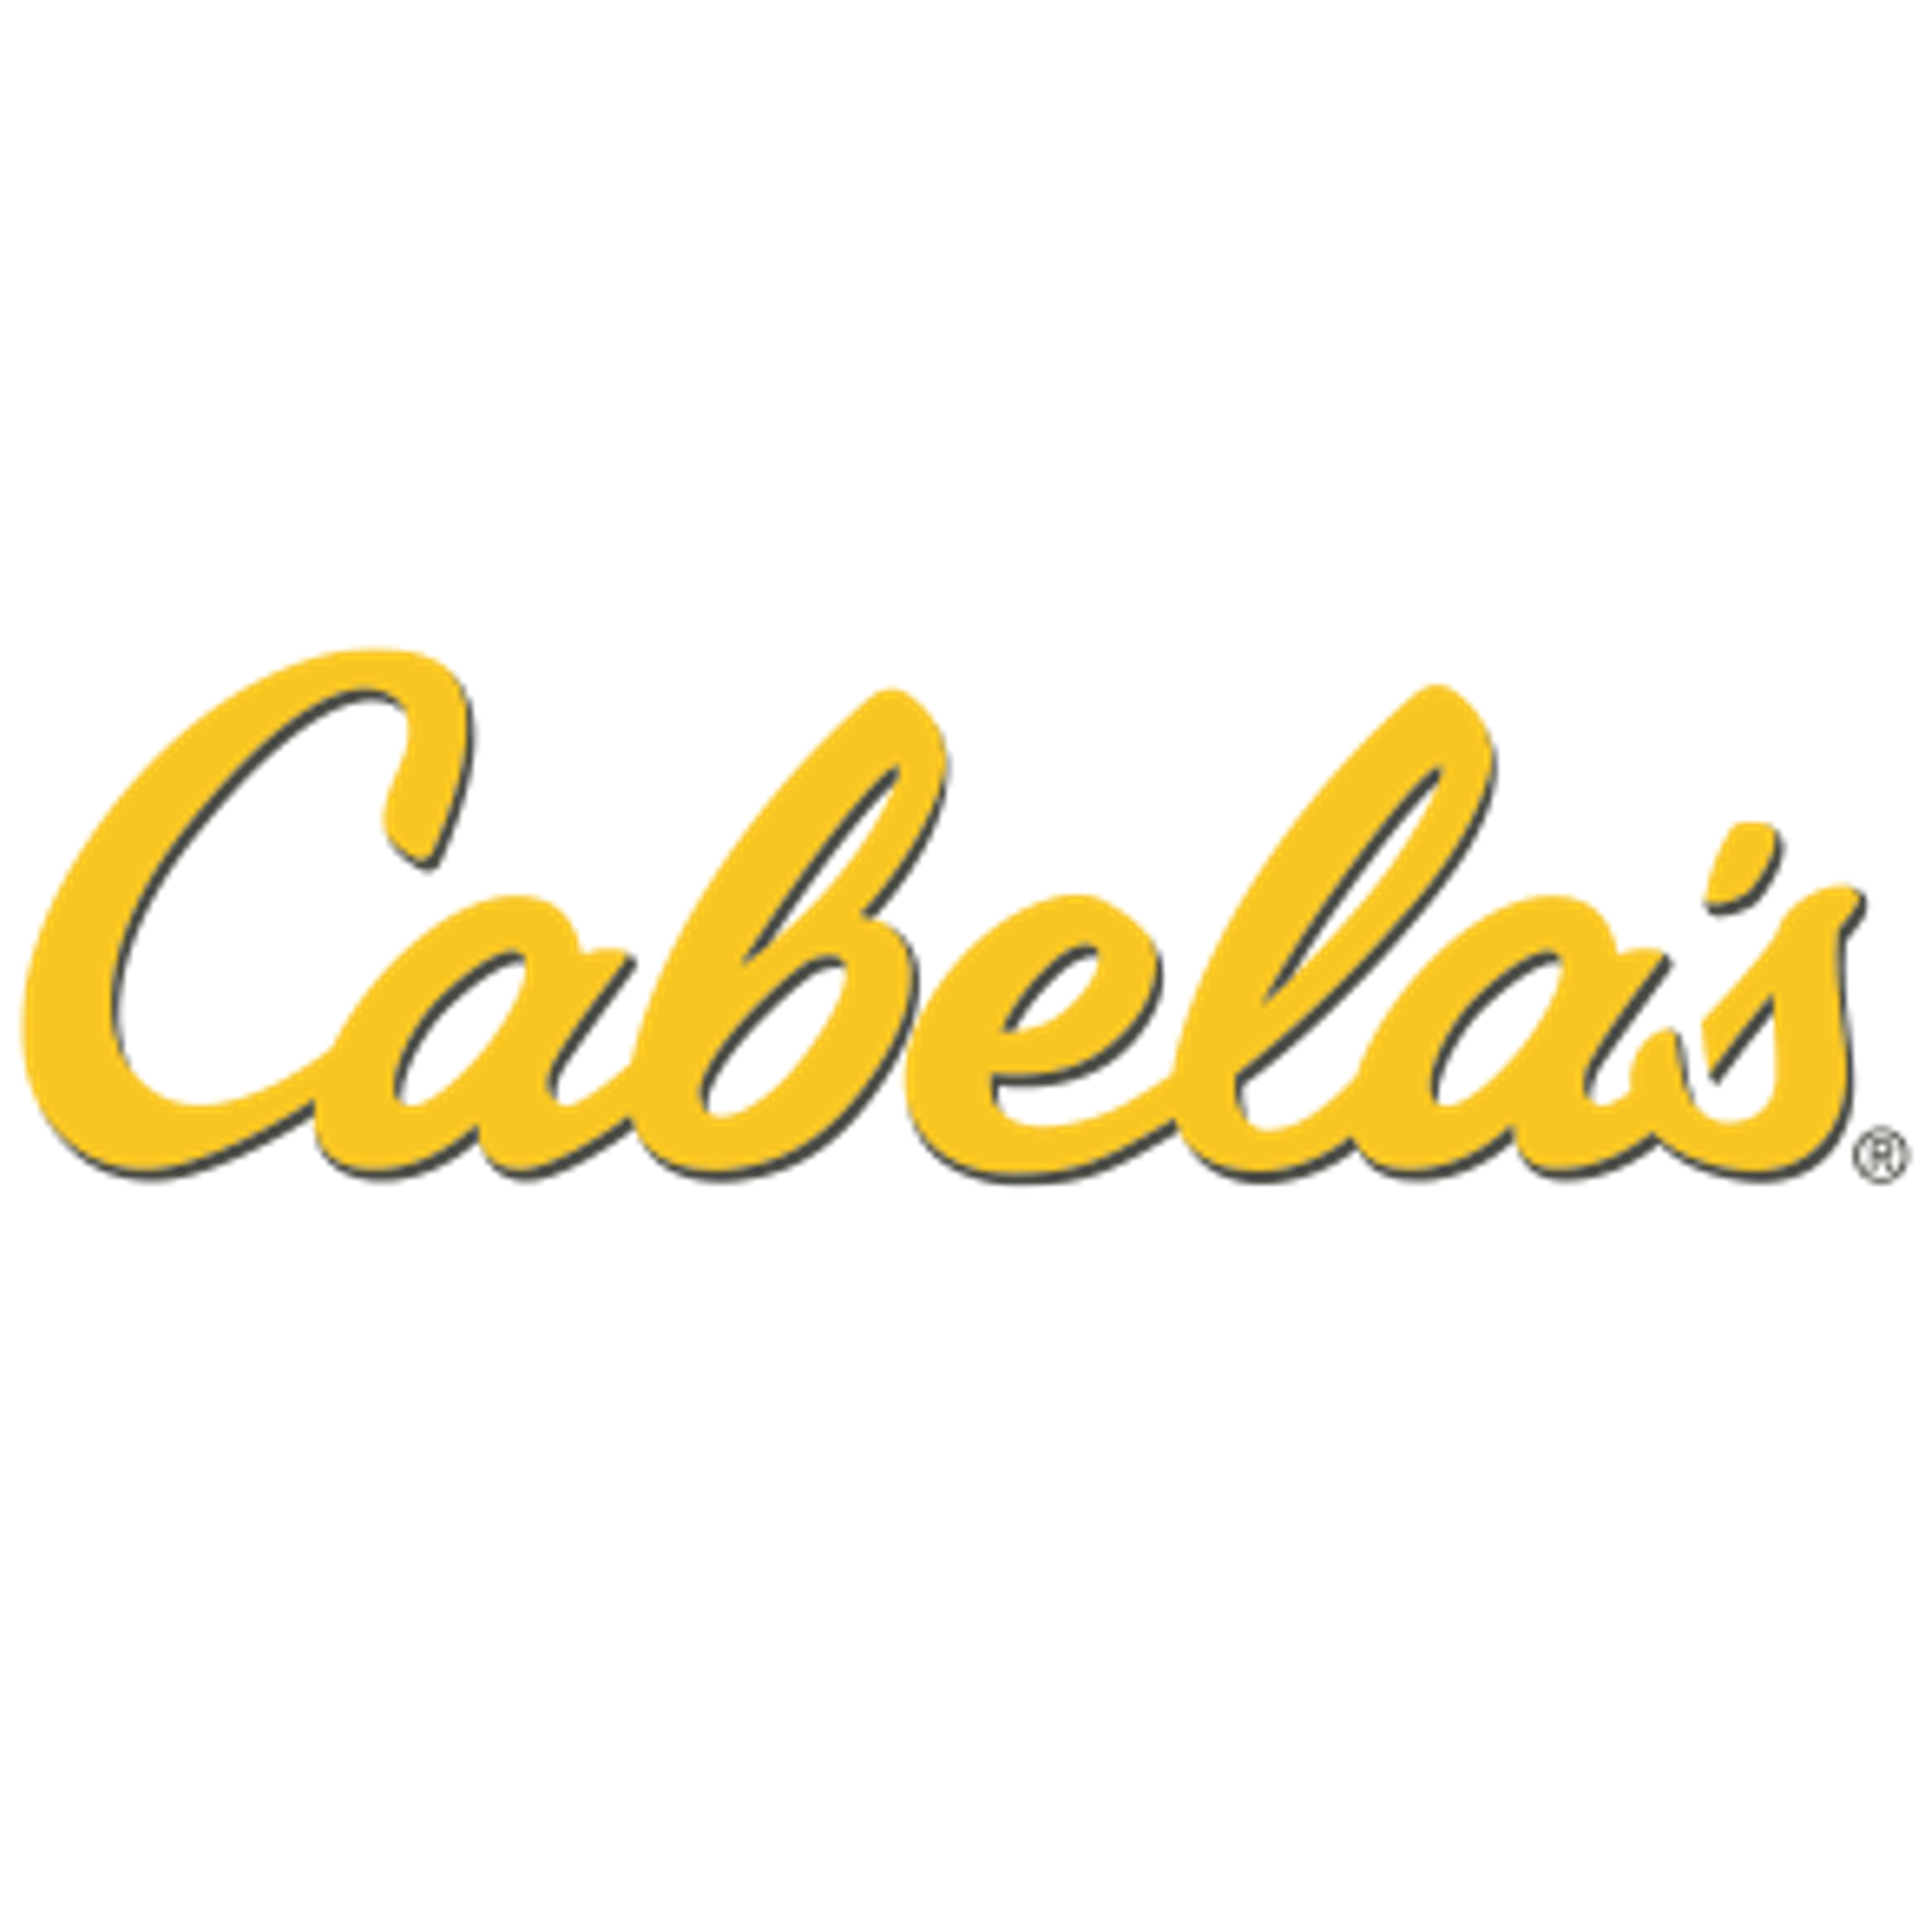 Cabela’s